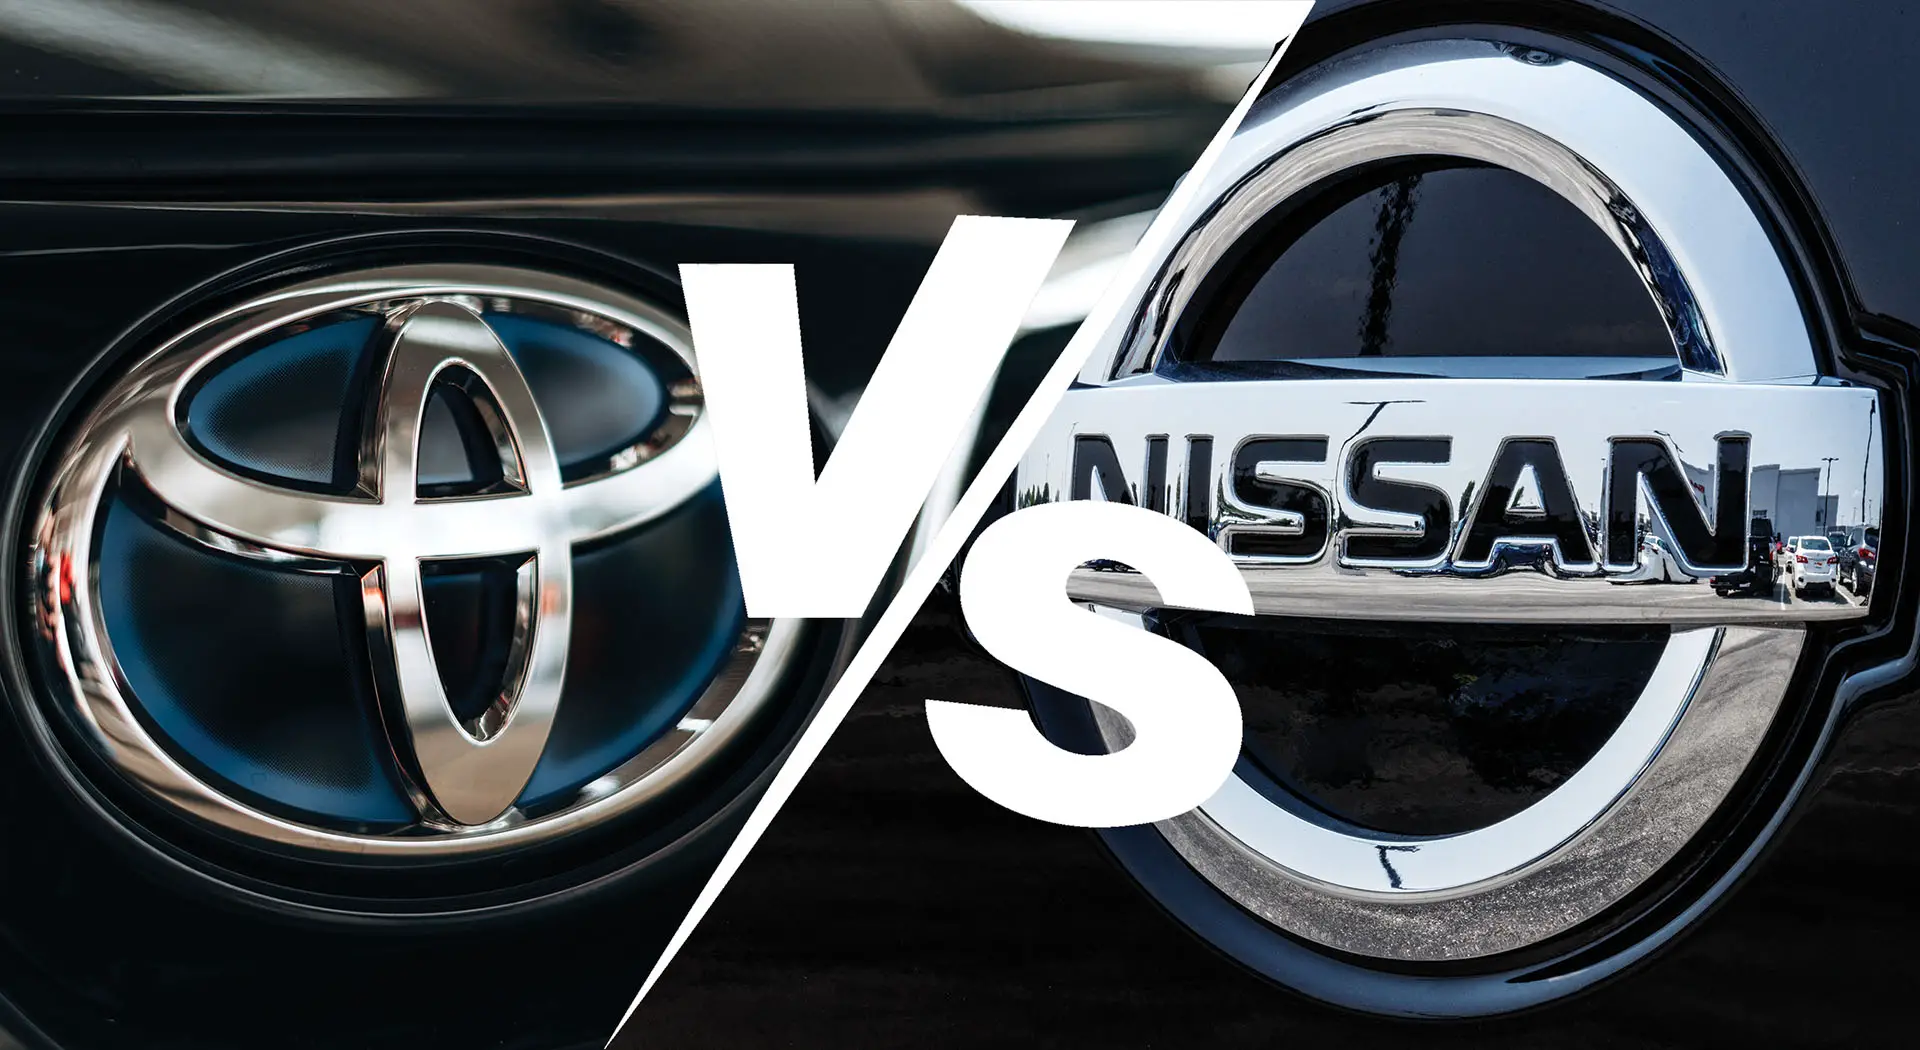 Toyota Camry vs. Nissan Altima